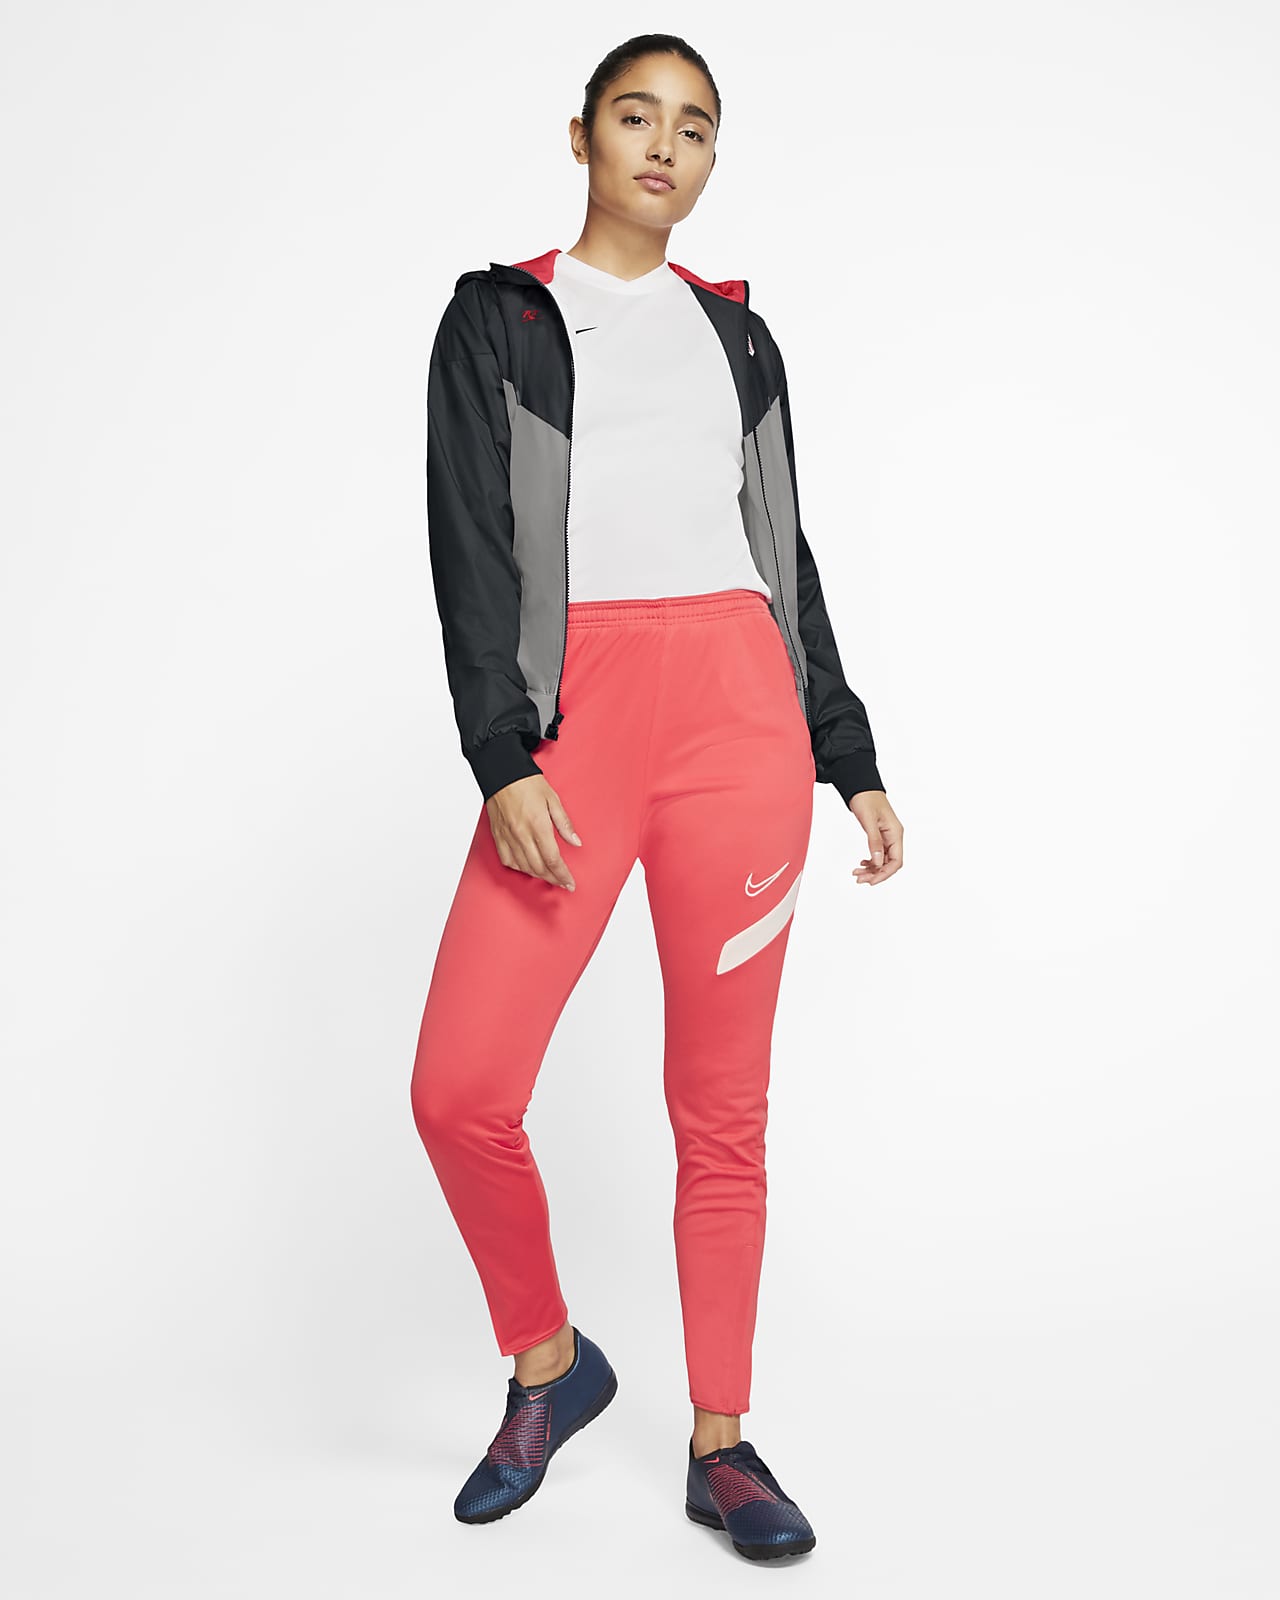 U.S. Windrunner Women's Jacket. Nike.com